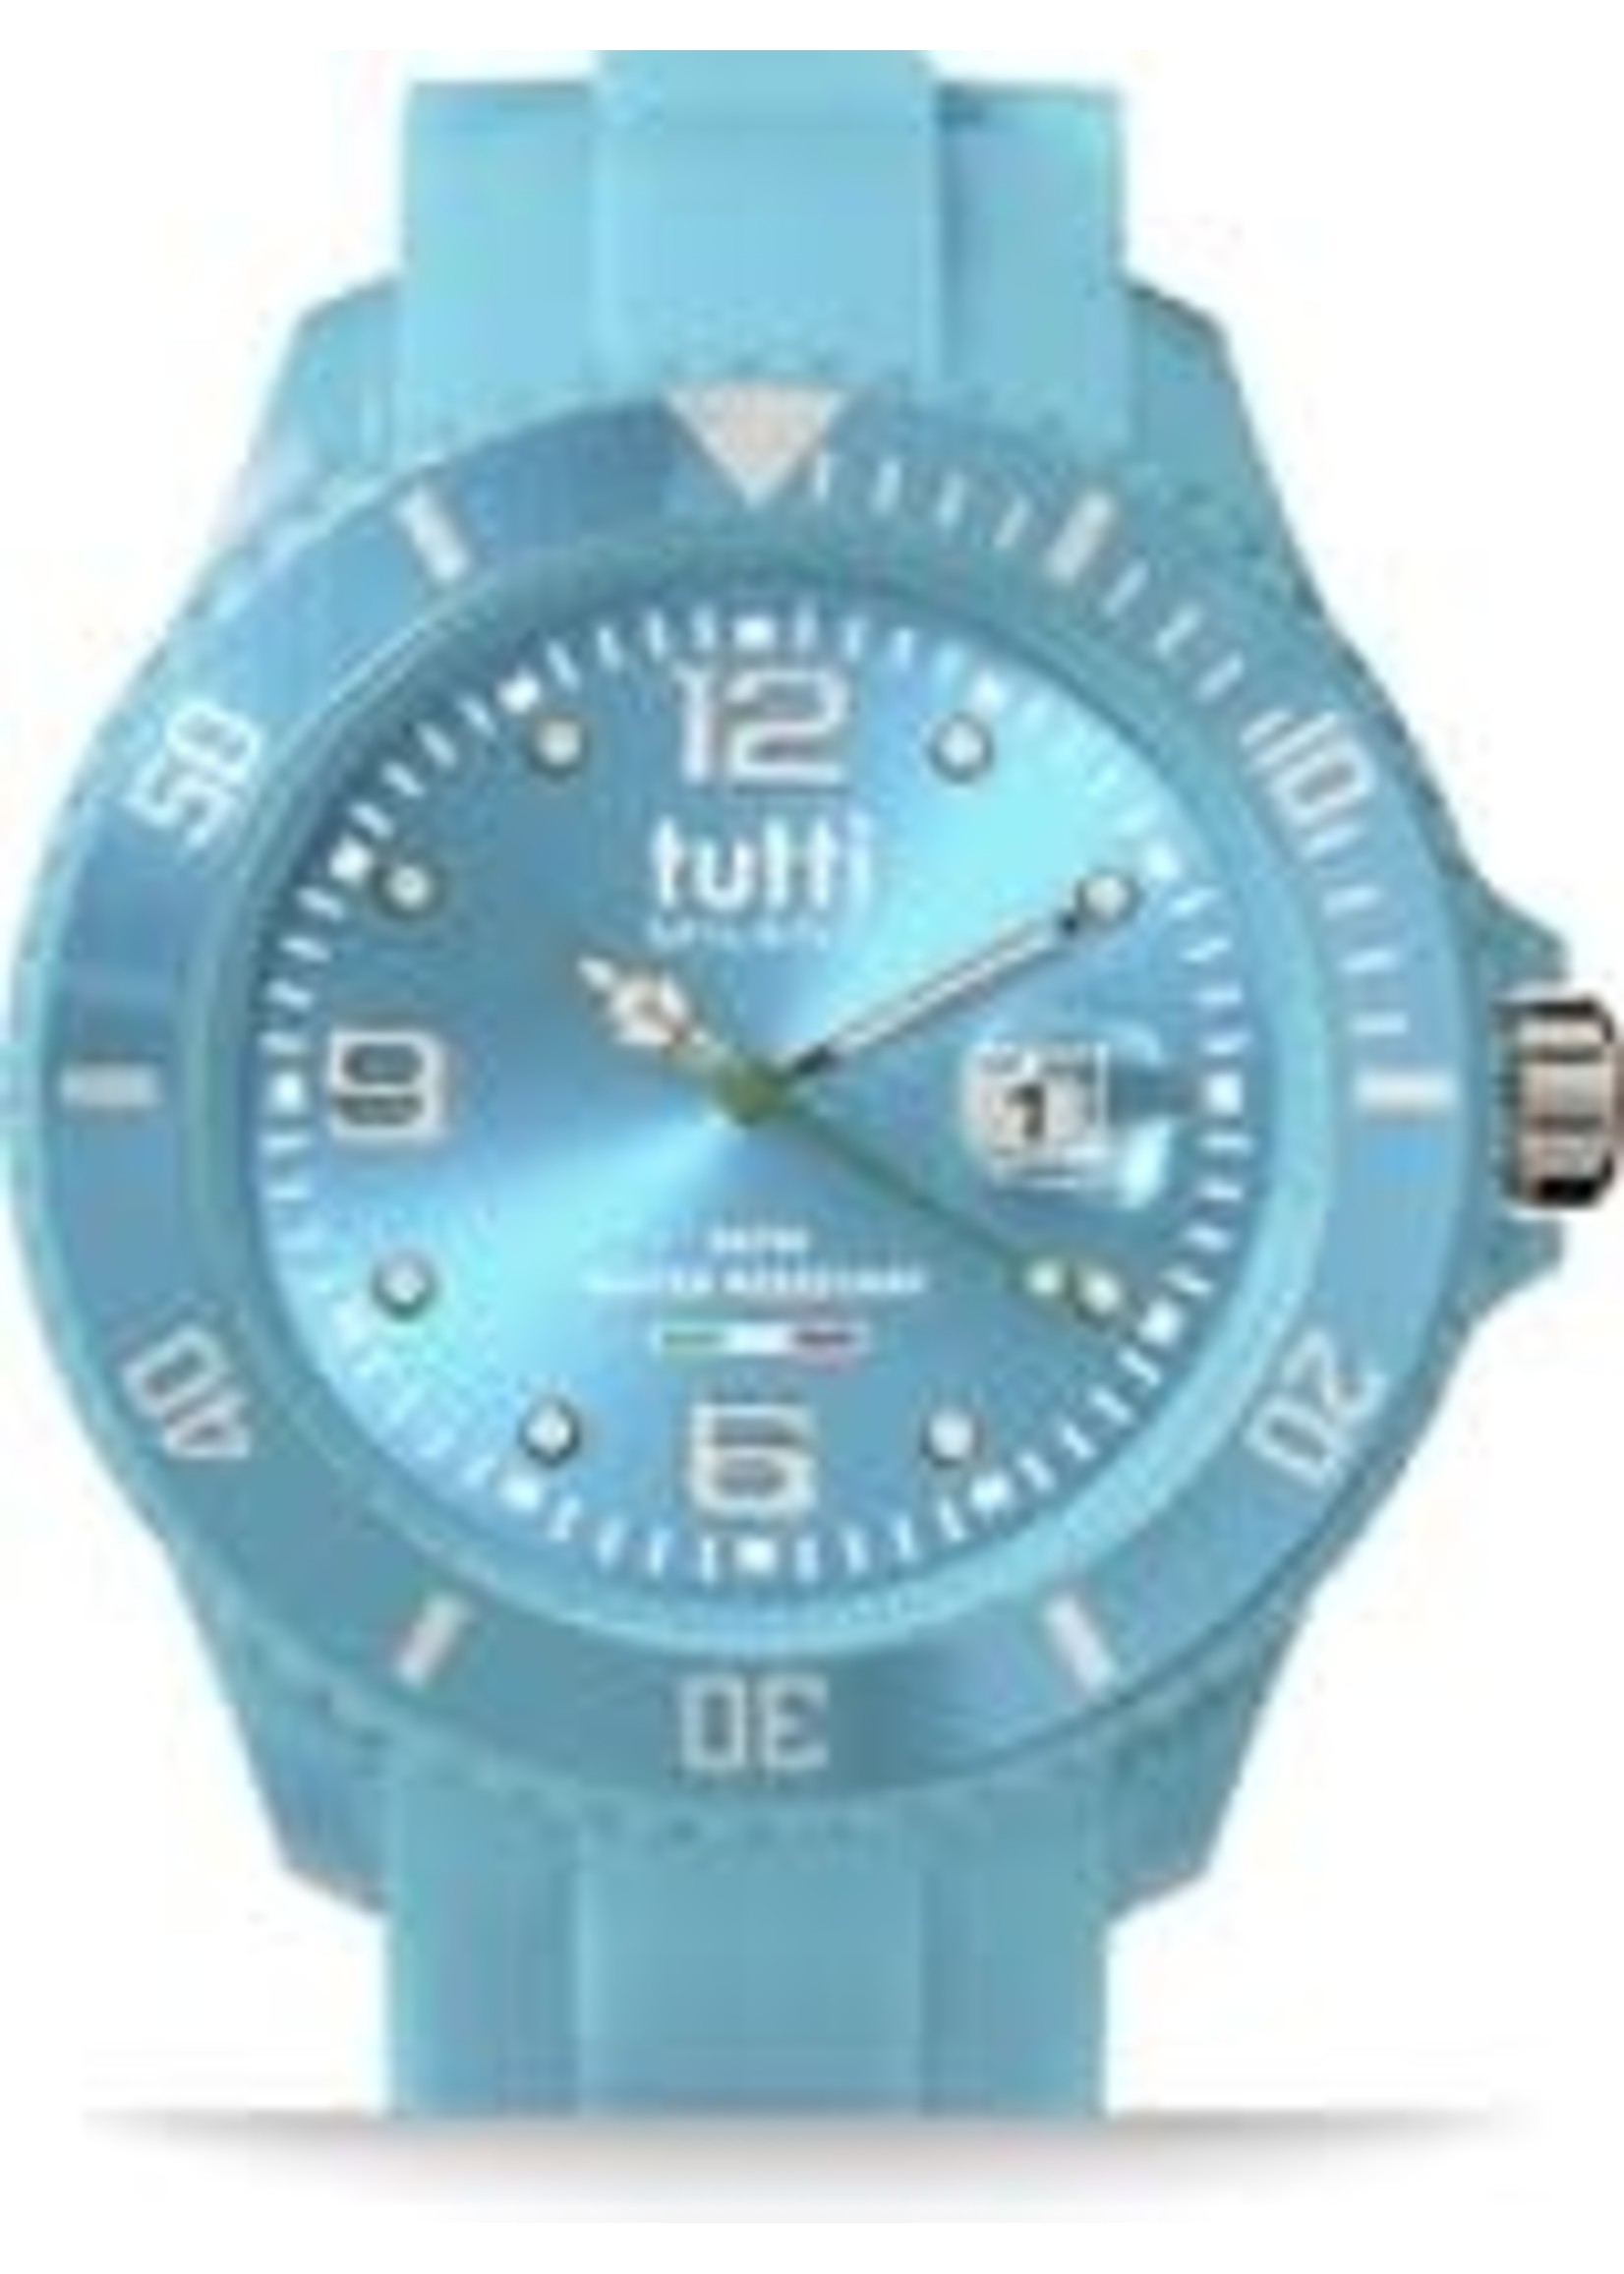 Tutti Milano Tutti Milano - TM001TU - horloge - 48MM - turquoise - collectie Pigmento